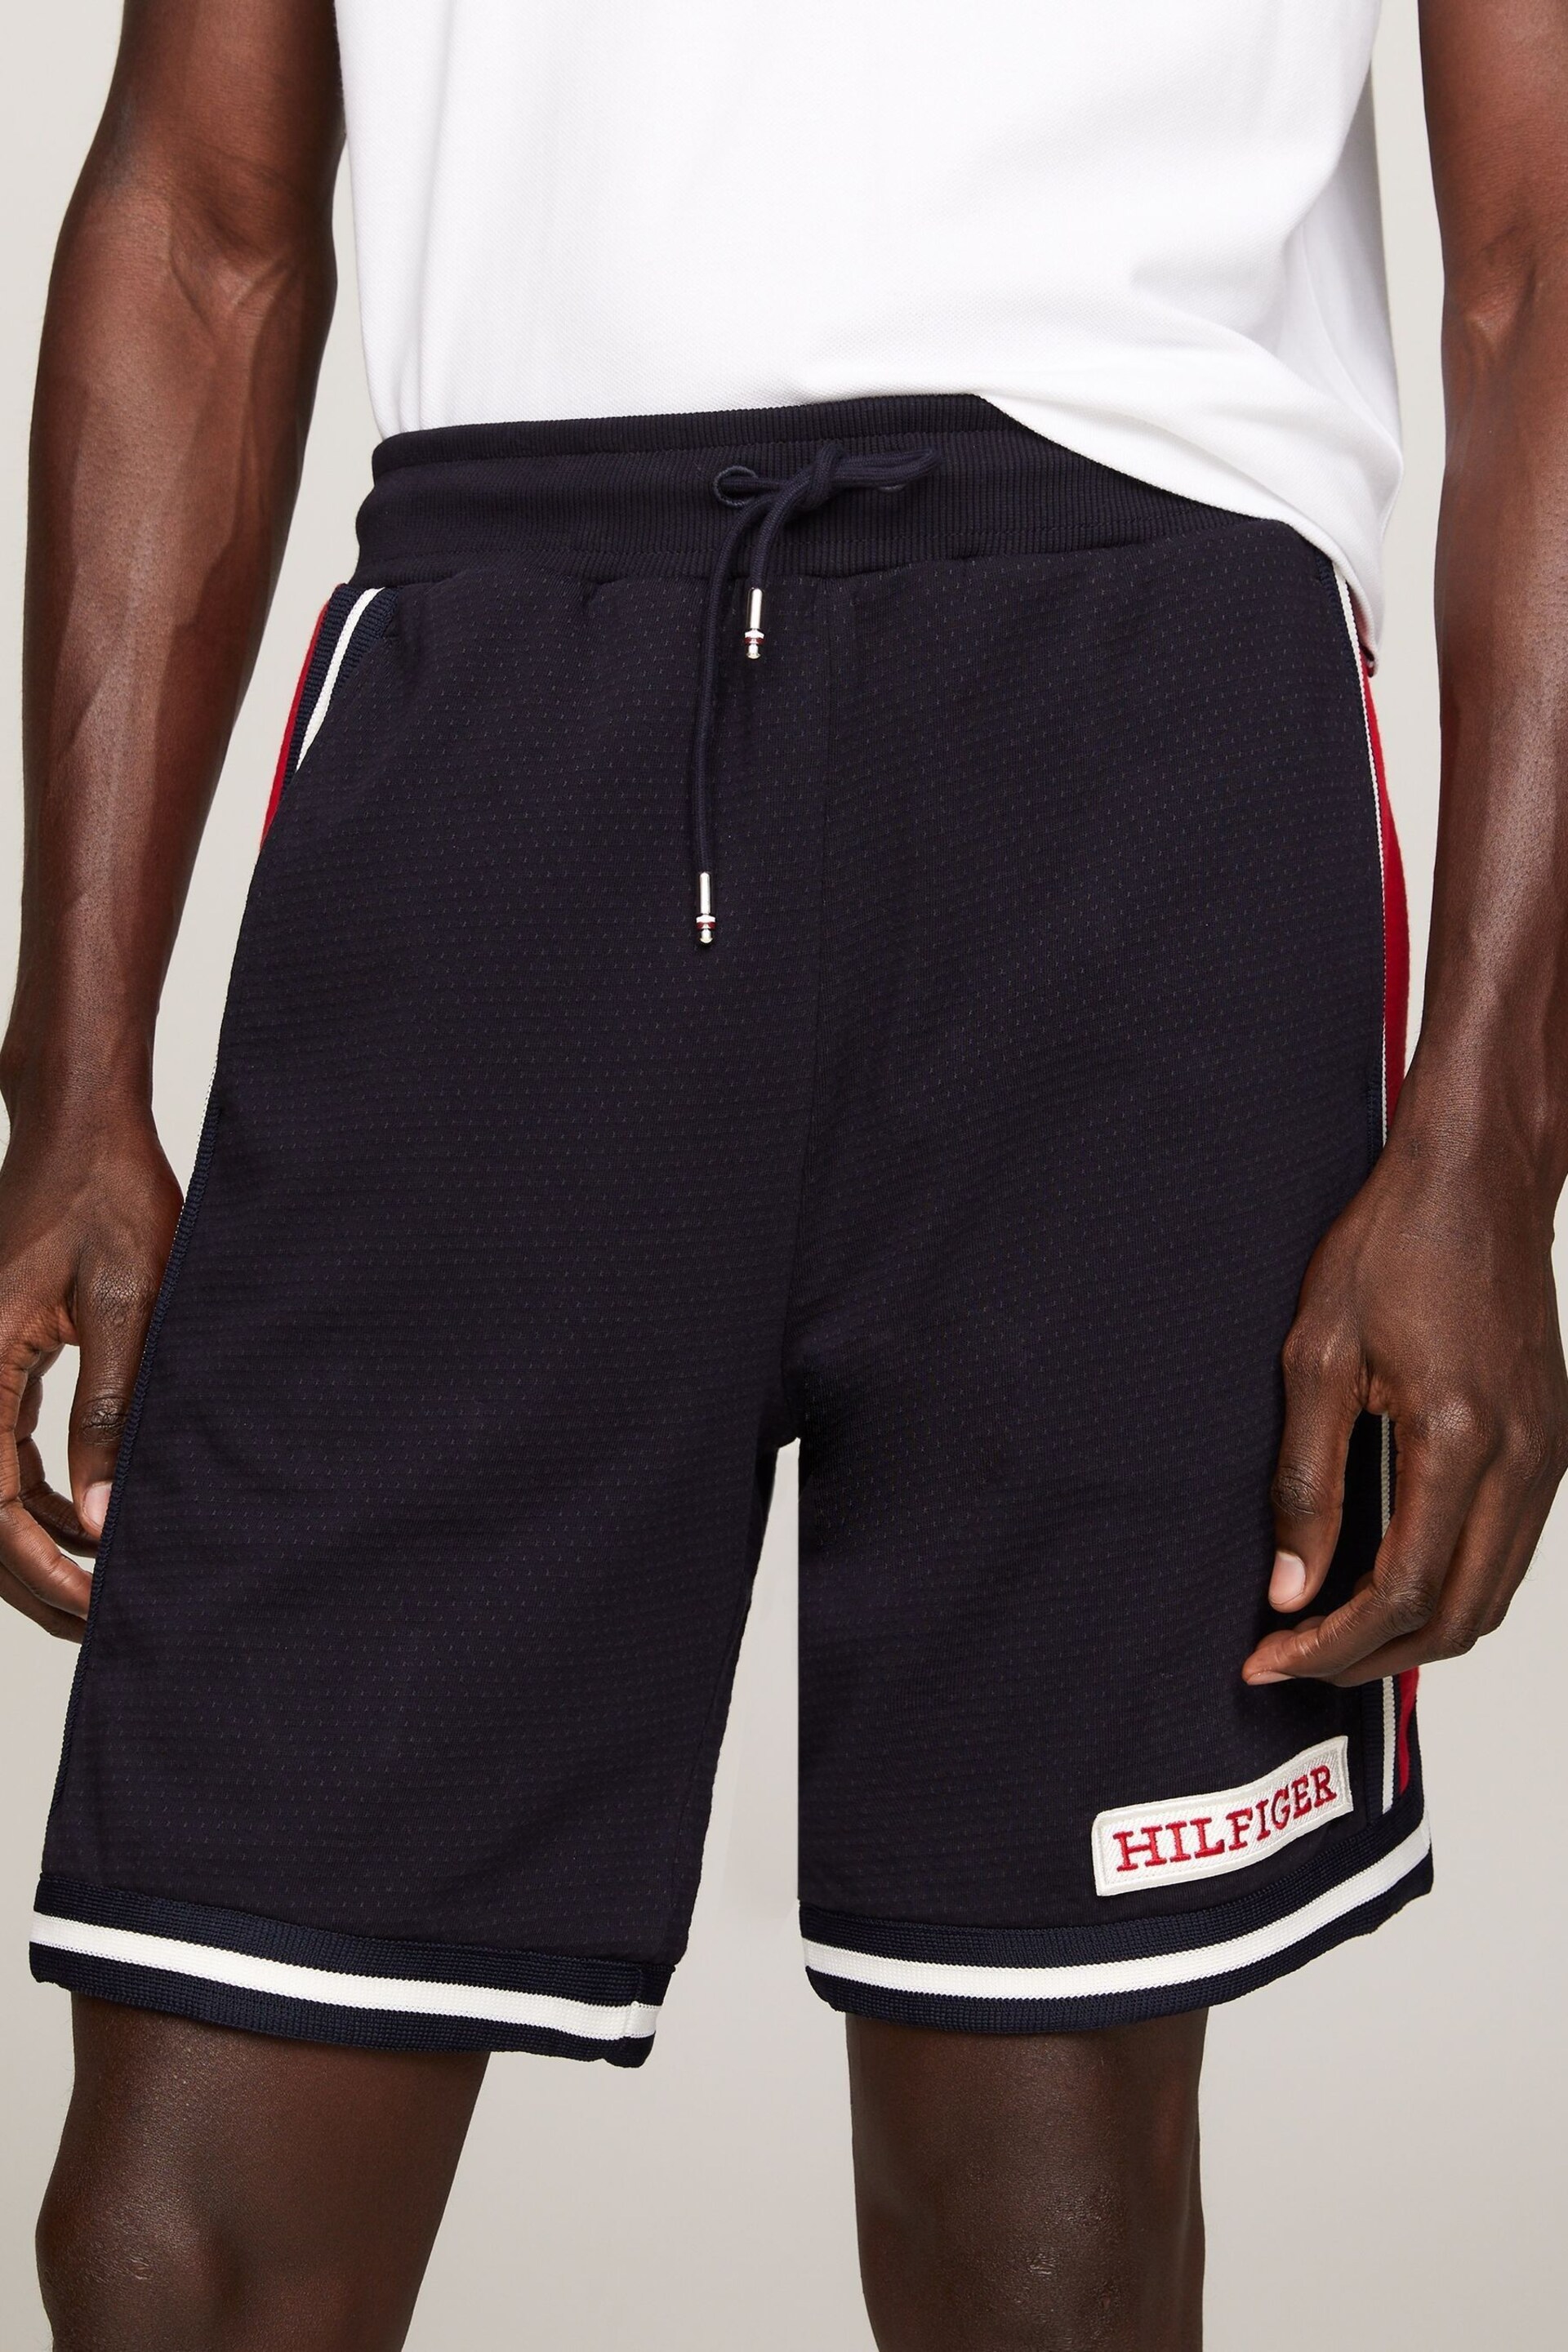 Tommy Hilfiger Black Sport Monotype Sweat Shorts - Image 1 of 6